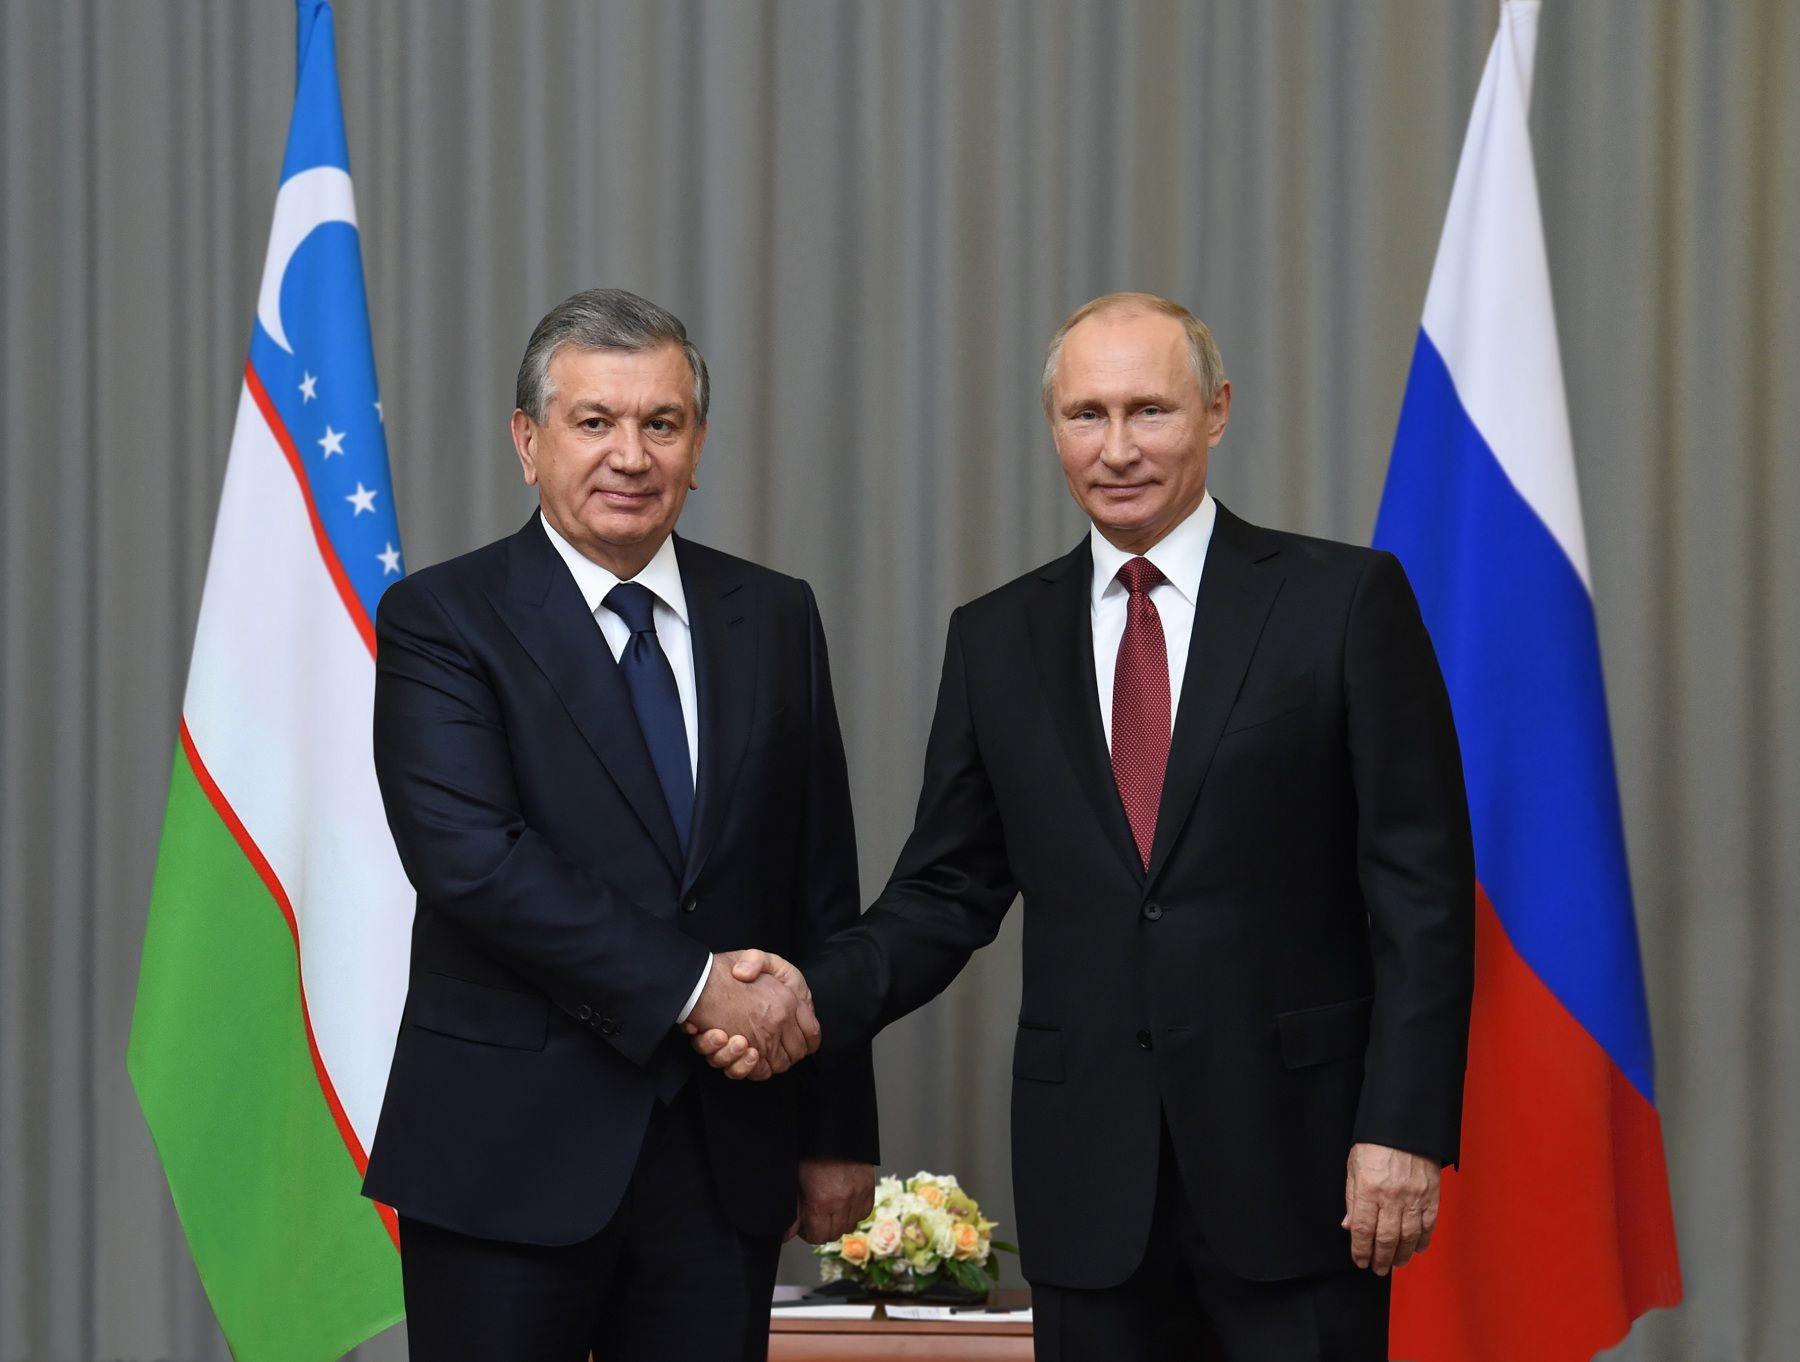 Shavkat Mirziyoyev congratulates Vladimir Putin on his victory in the presidential election